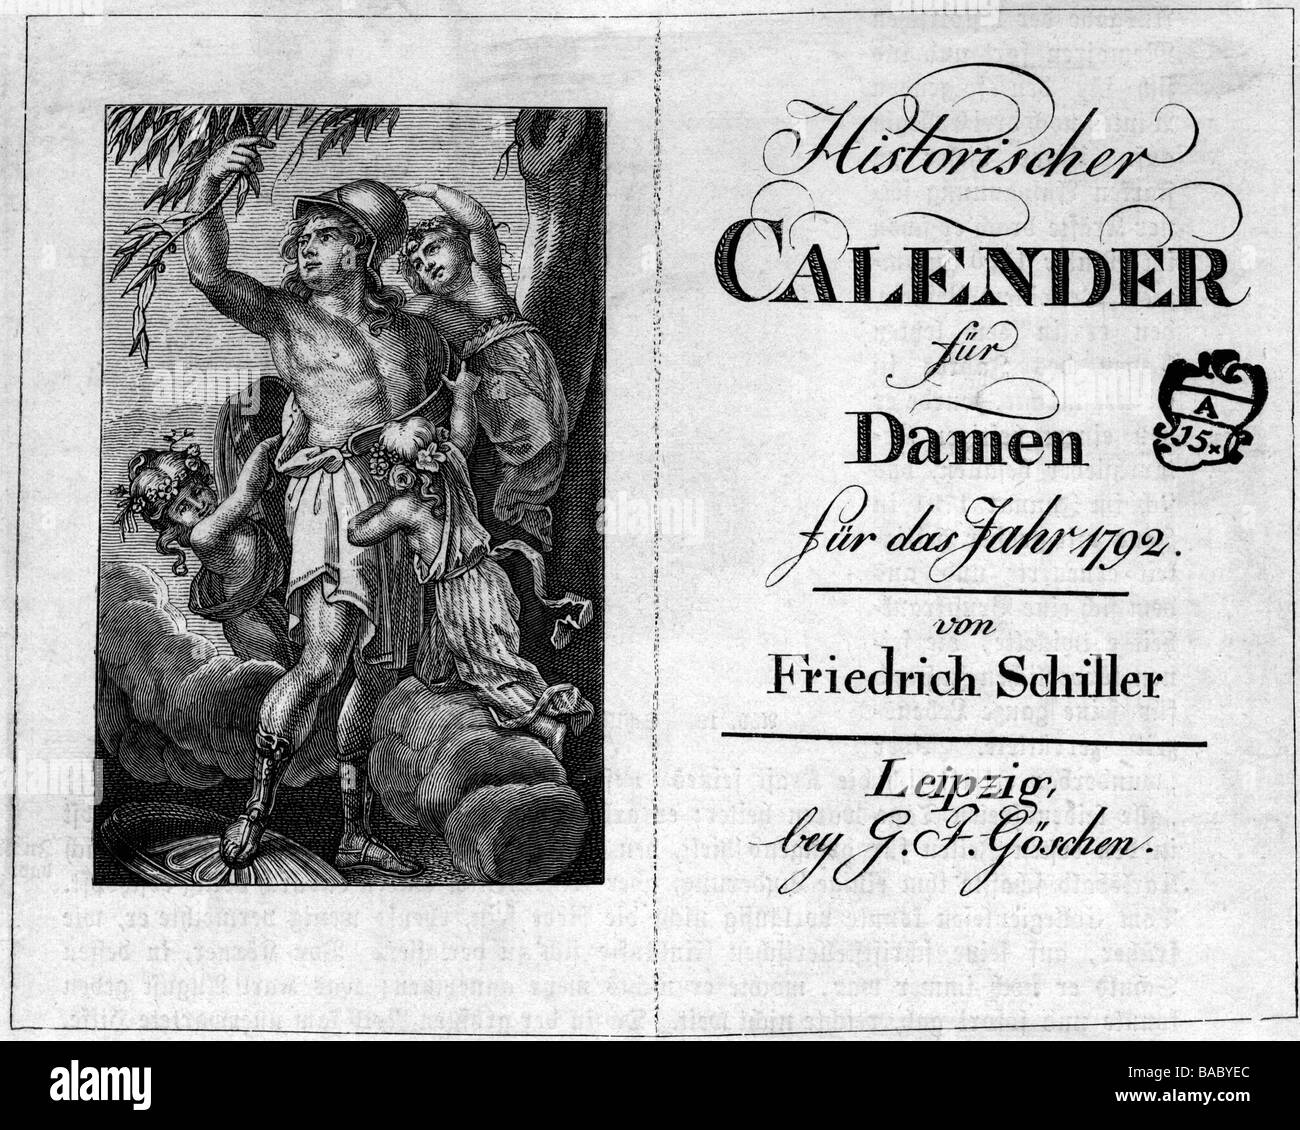 Schiller, Friedrich, 10.11.1759 - 9.5.1805, autore/scrittore tedesco, 'Historischer Kalender für Damen', 1793, pubblicato da Georg Joachim Göschen, Lipsia, titolo, Foto Stock